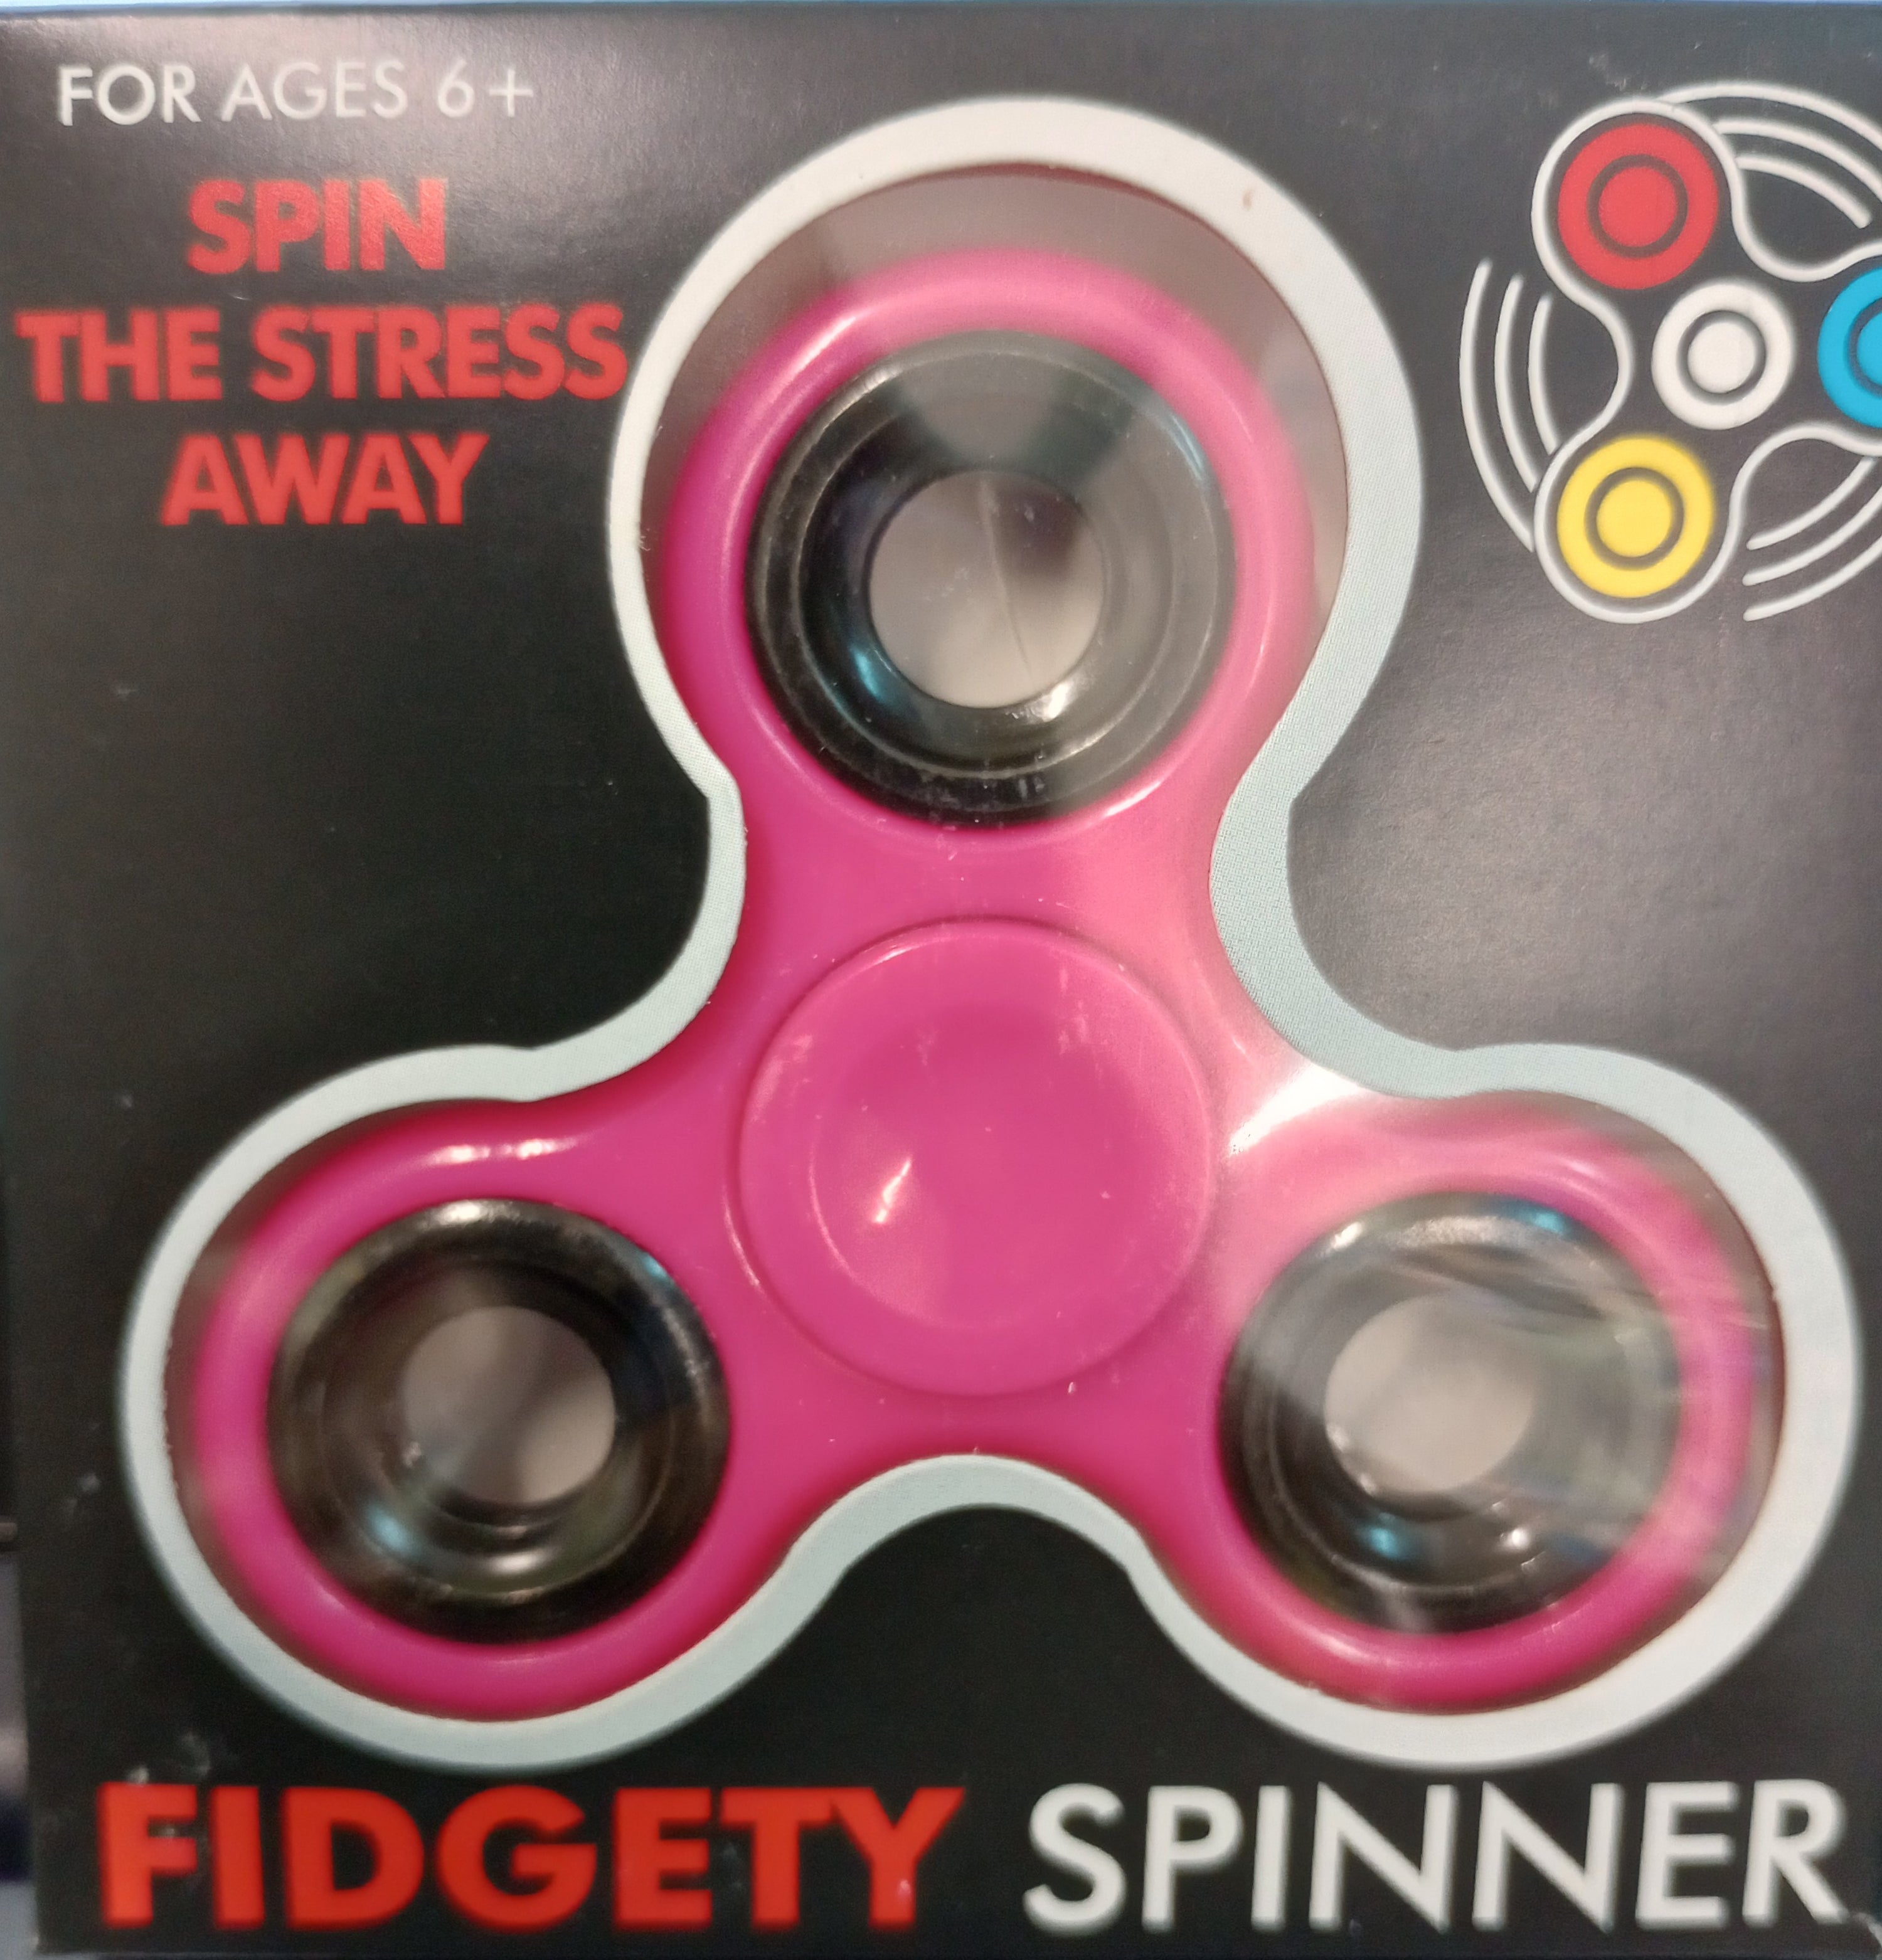 Classic Fidget Spinners